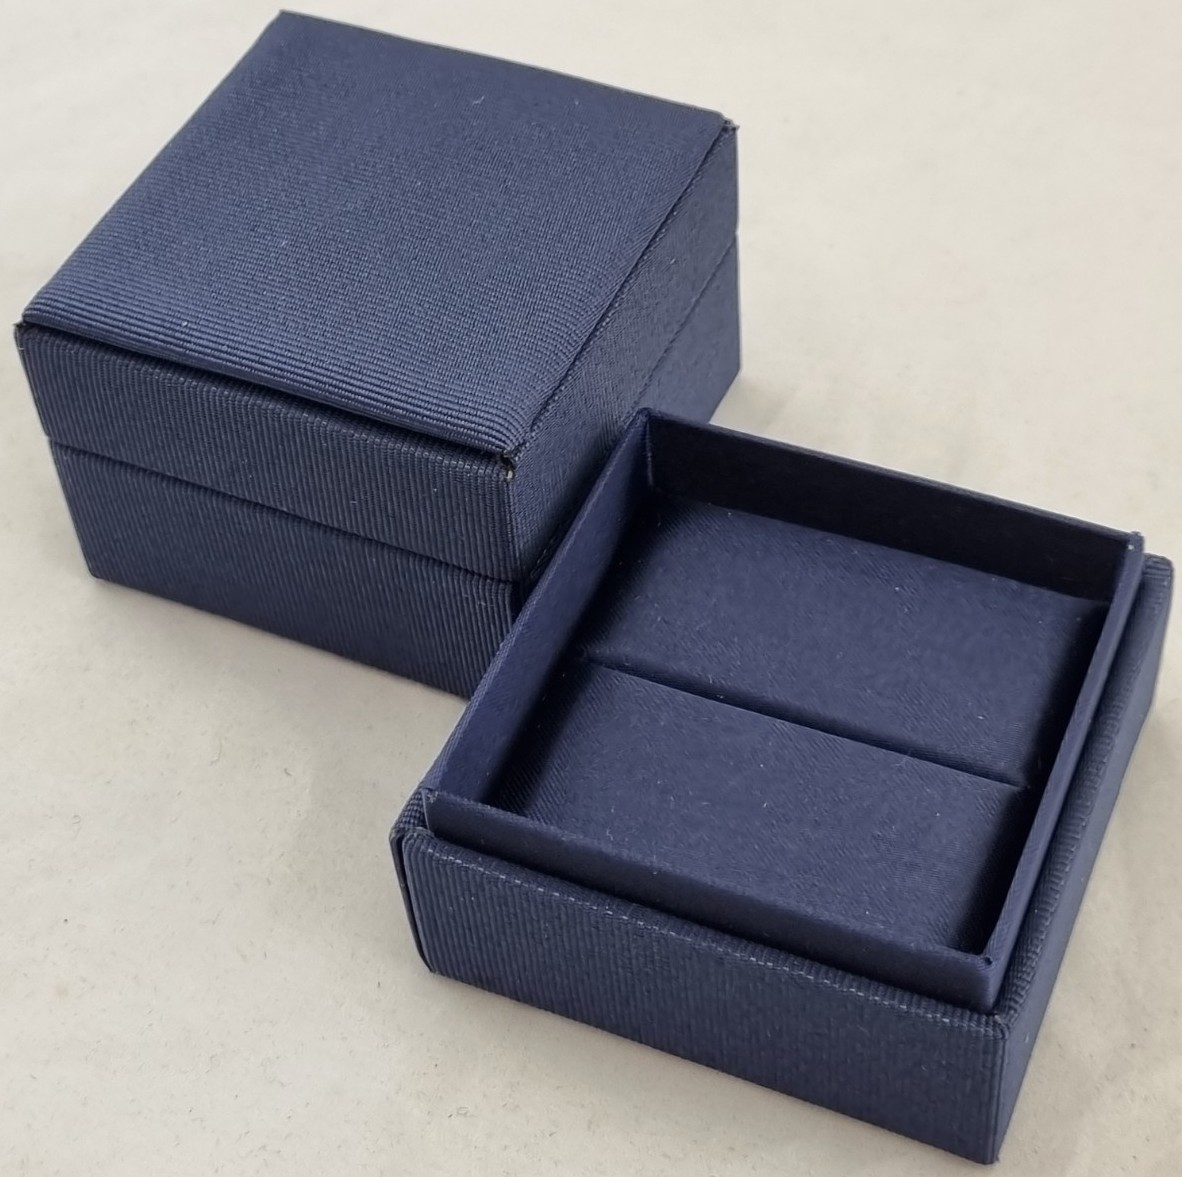 Blue Ring Box with satin interior